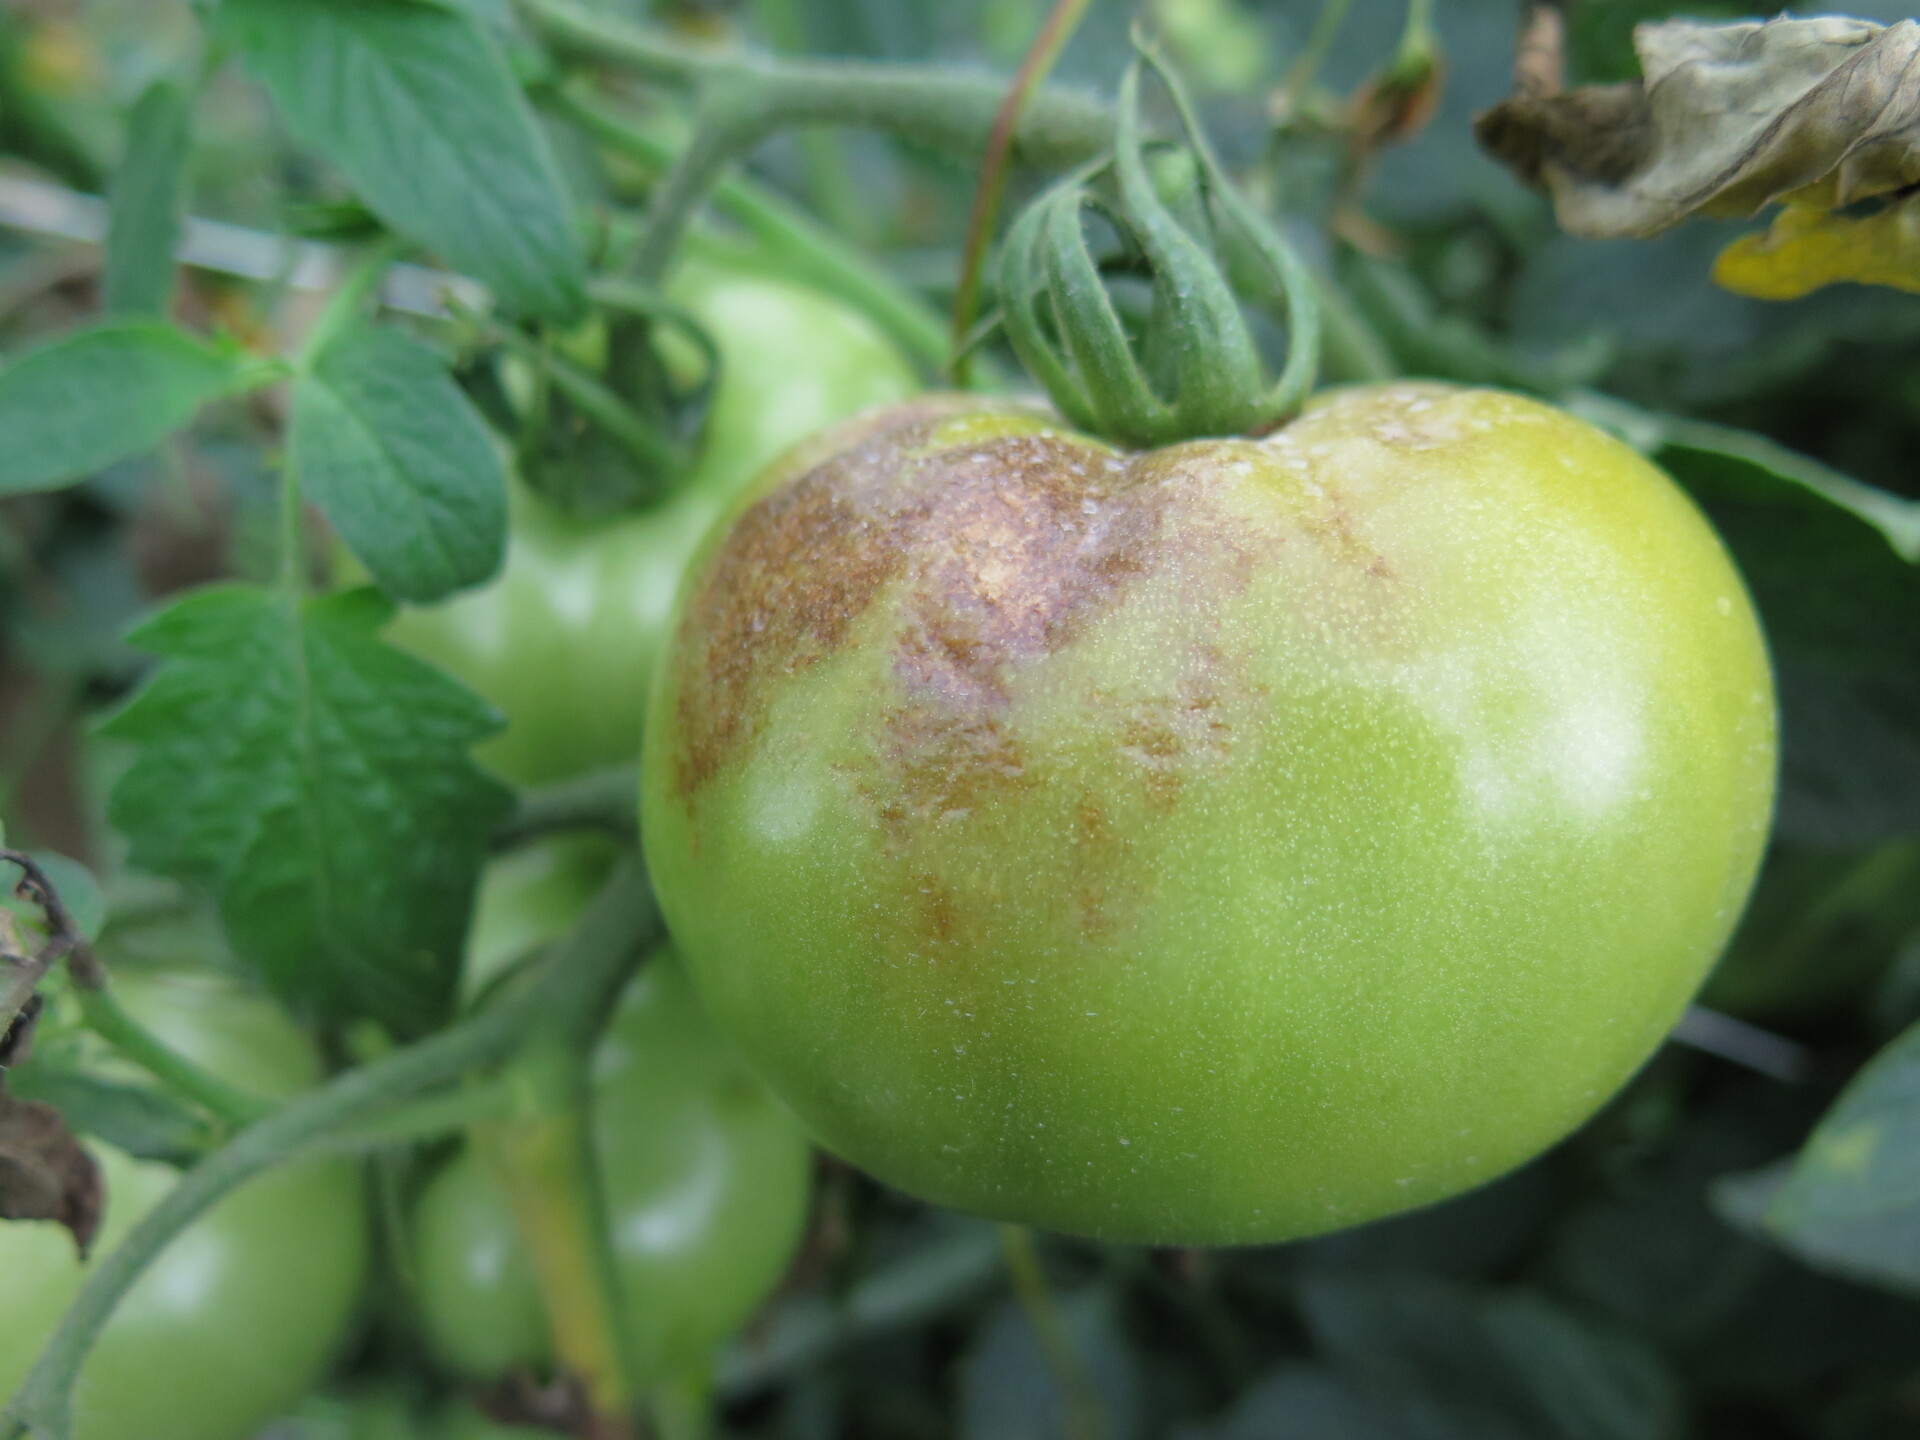 Figure 3. Late blight symptoms on tomato fruit